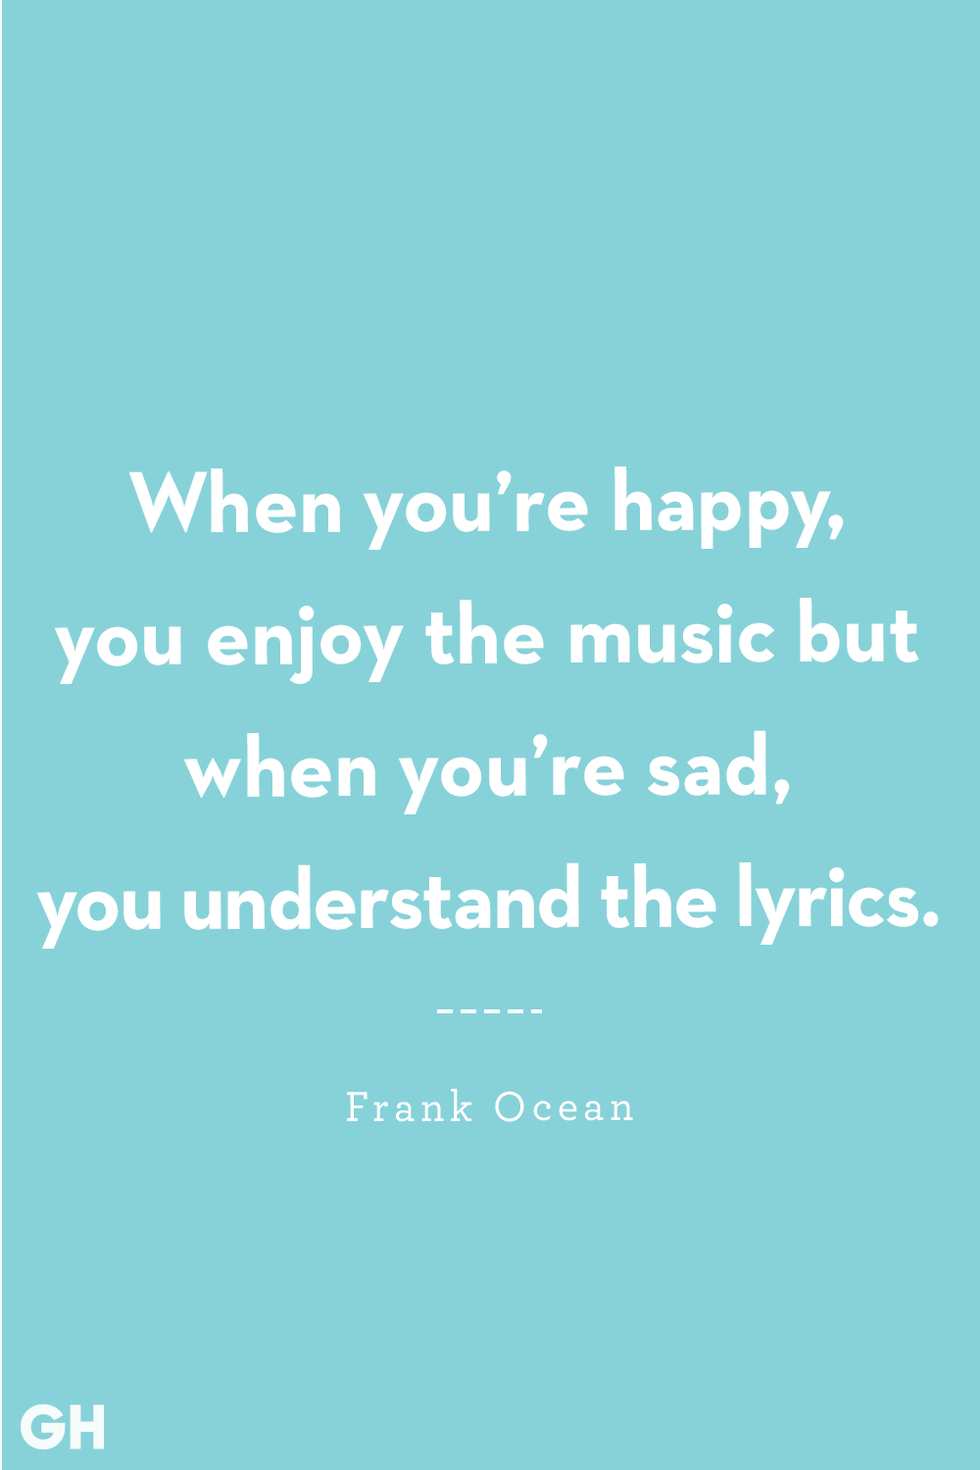 citate triste Frank Ocean